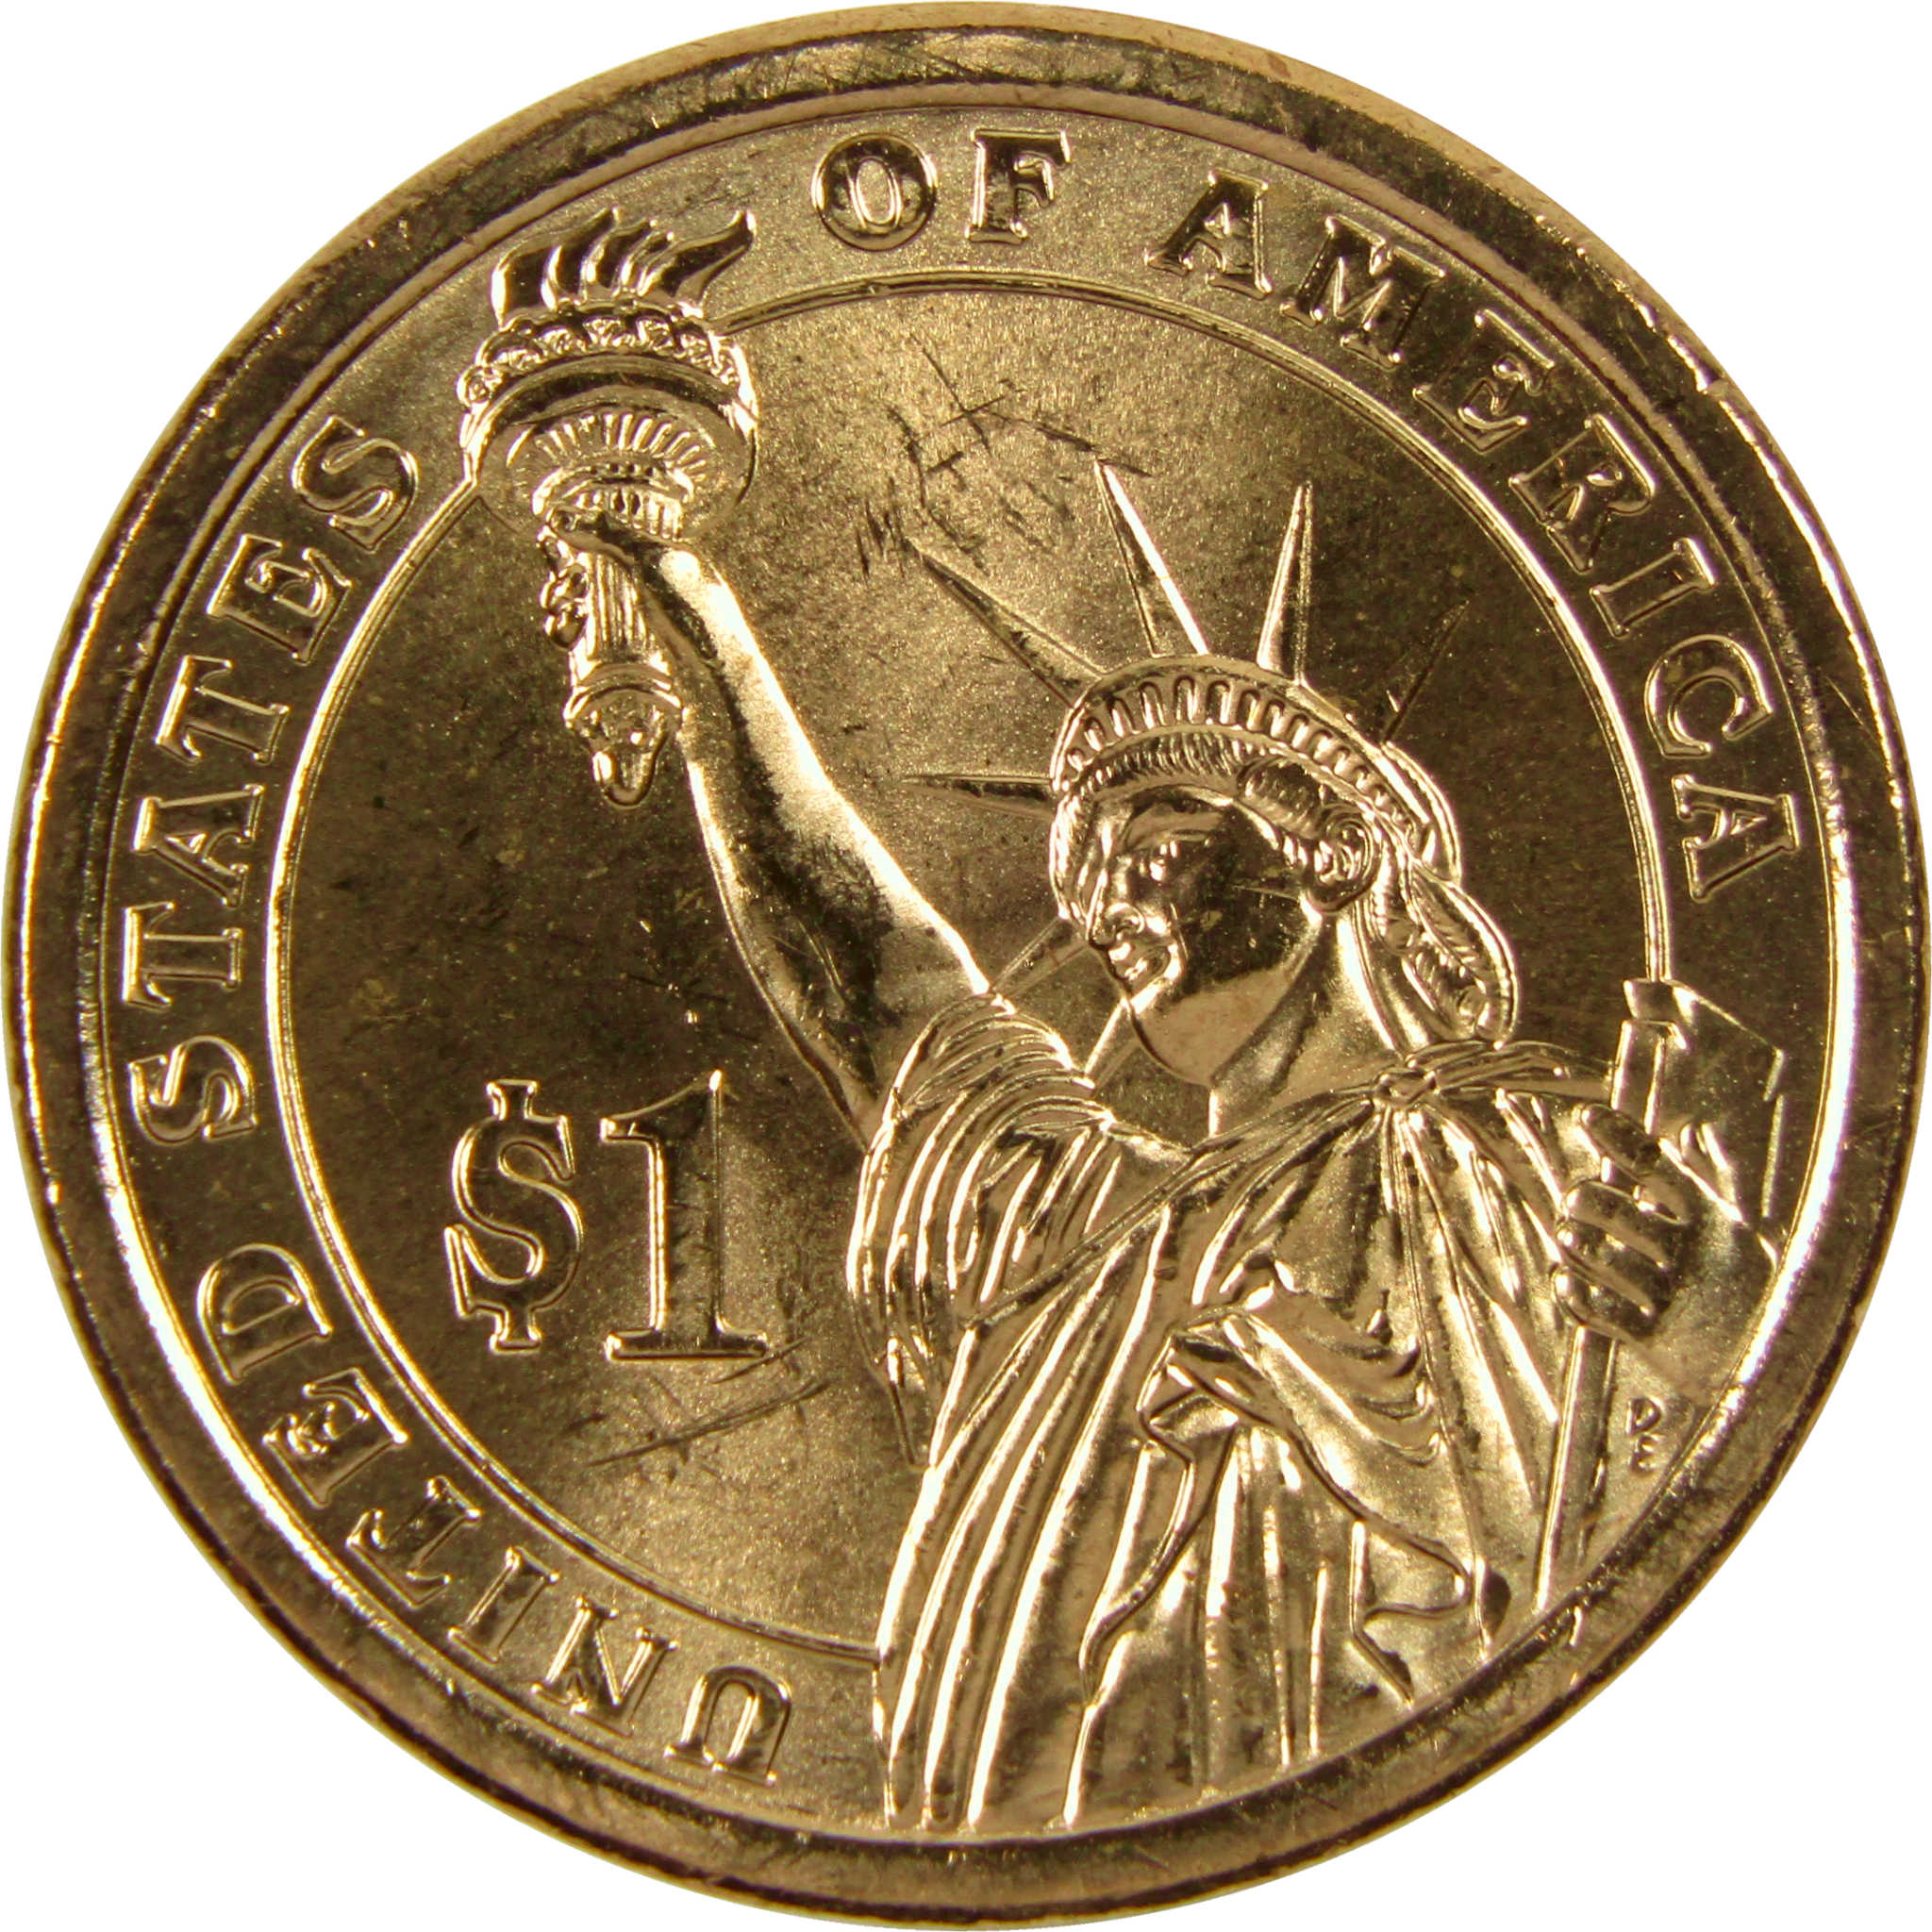 2010 D James Buchanan Presidential Dollar BU Uncirculated $1 Coin